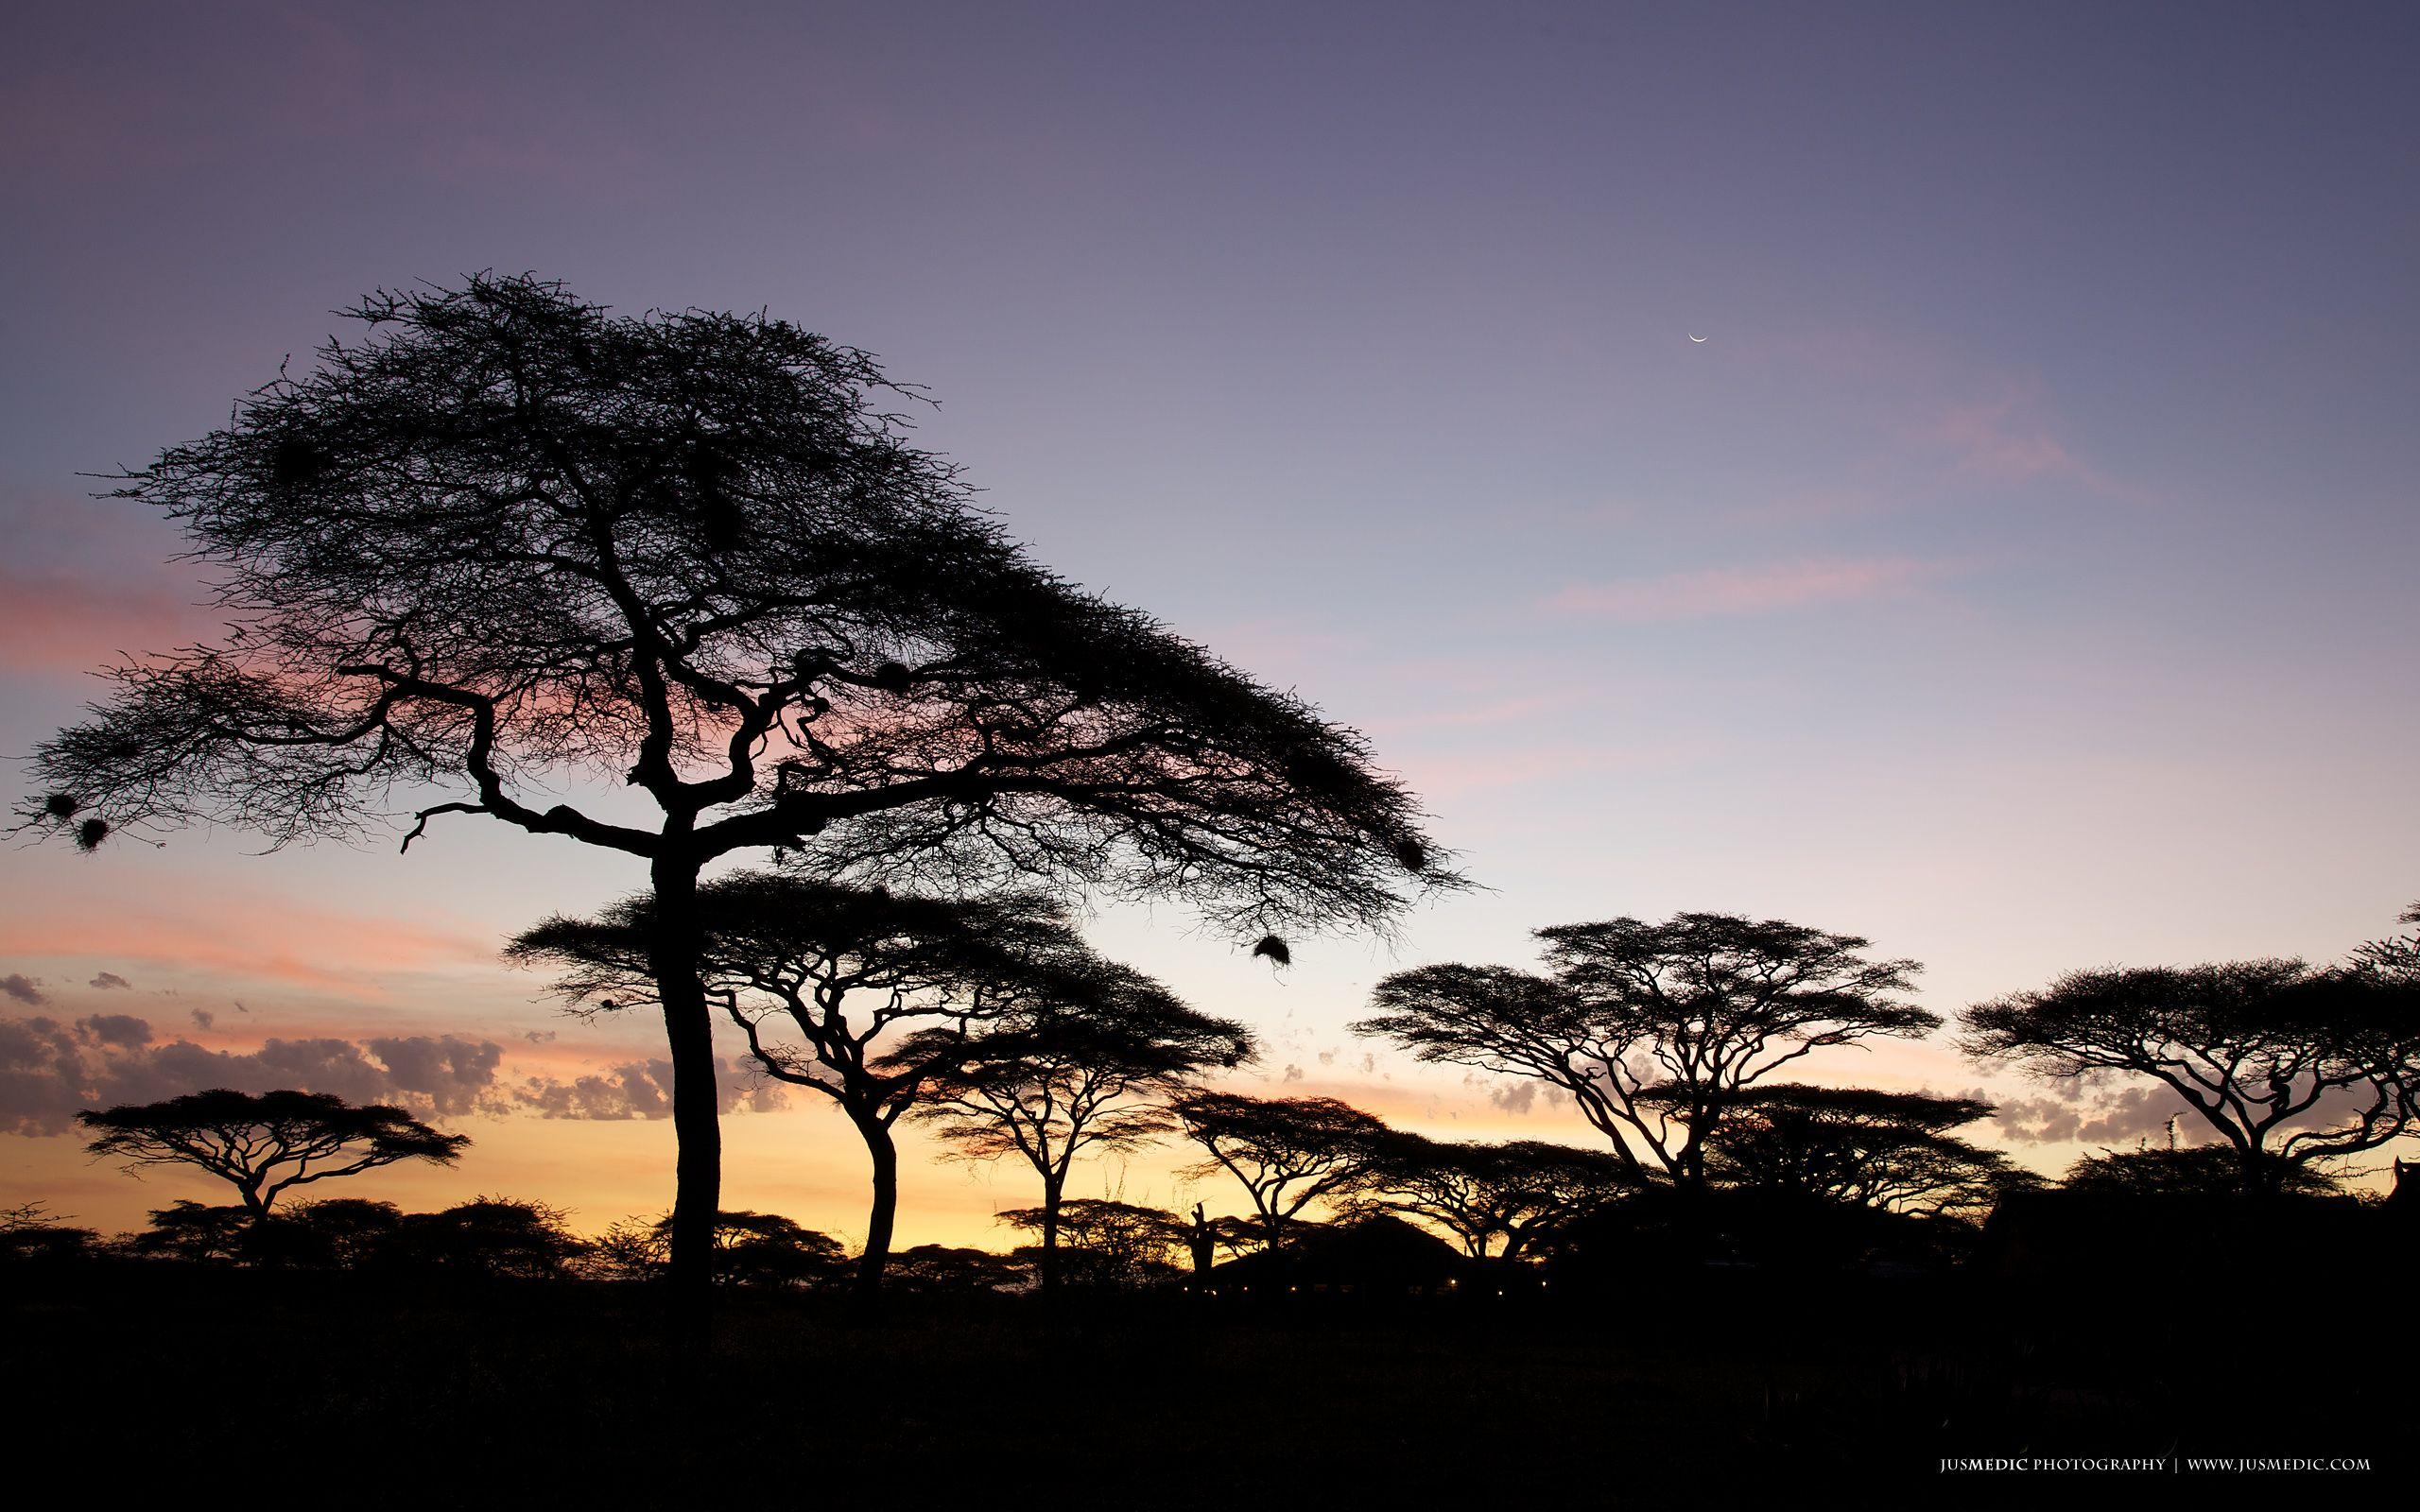 Serengeti National Park Park in Tanzania